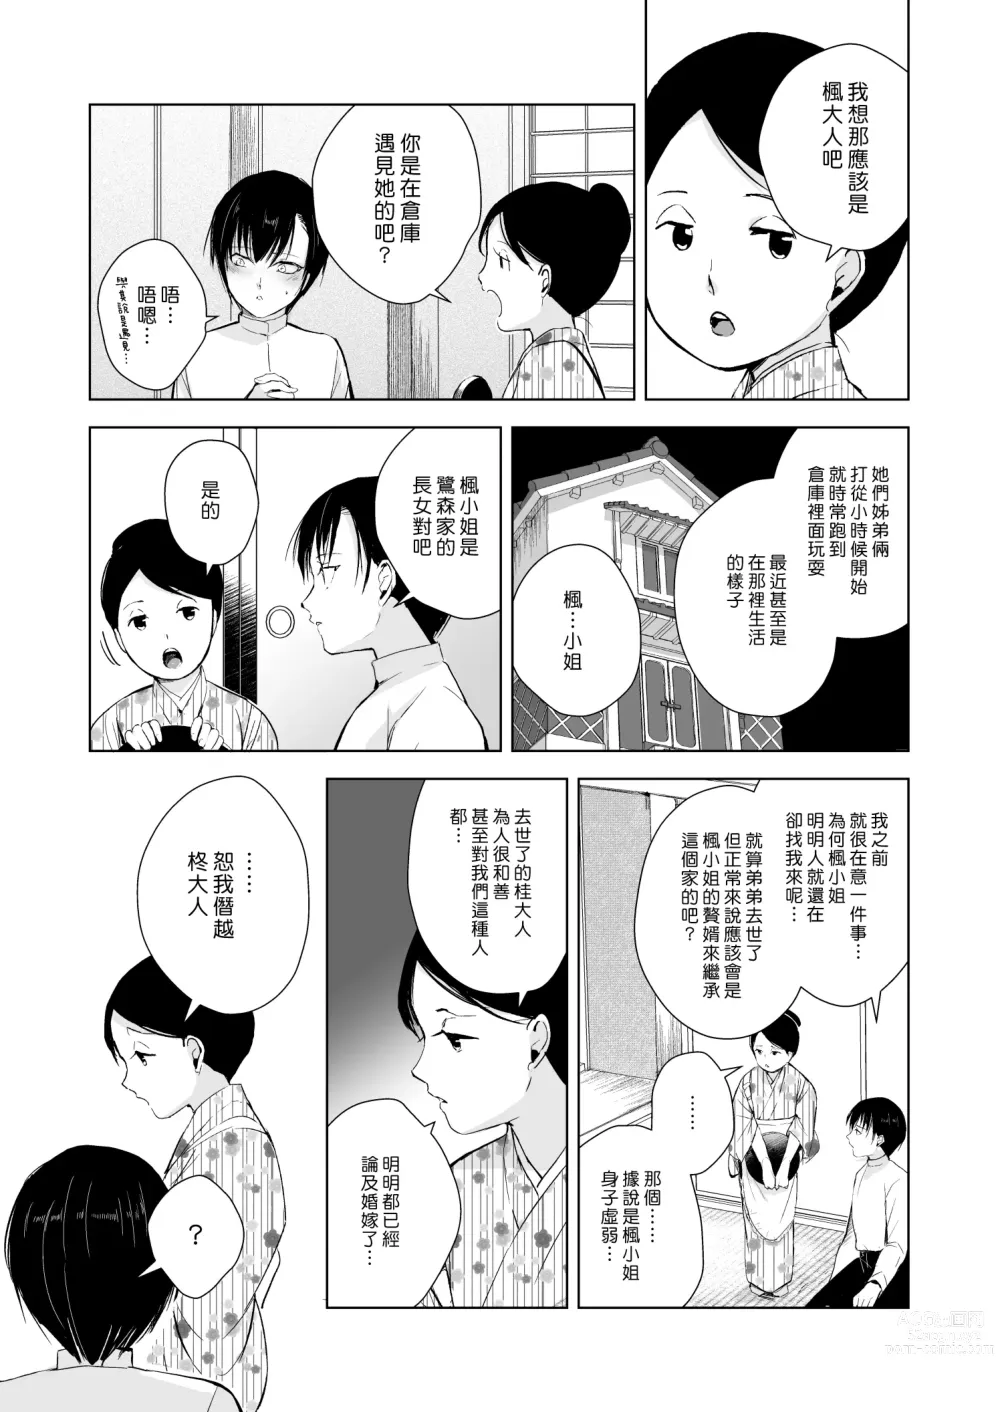 Page 5 of doujinshi 和楓小姐在倉庫裡